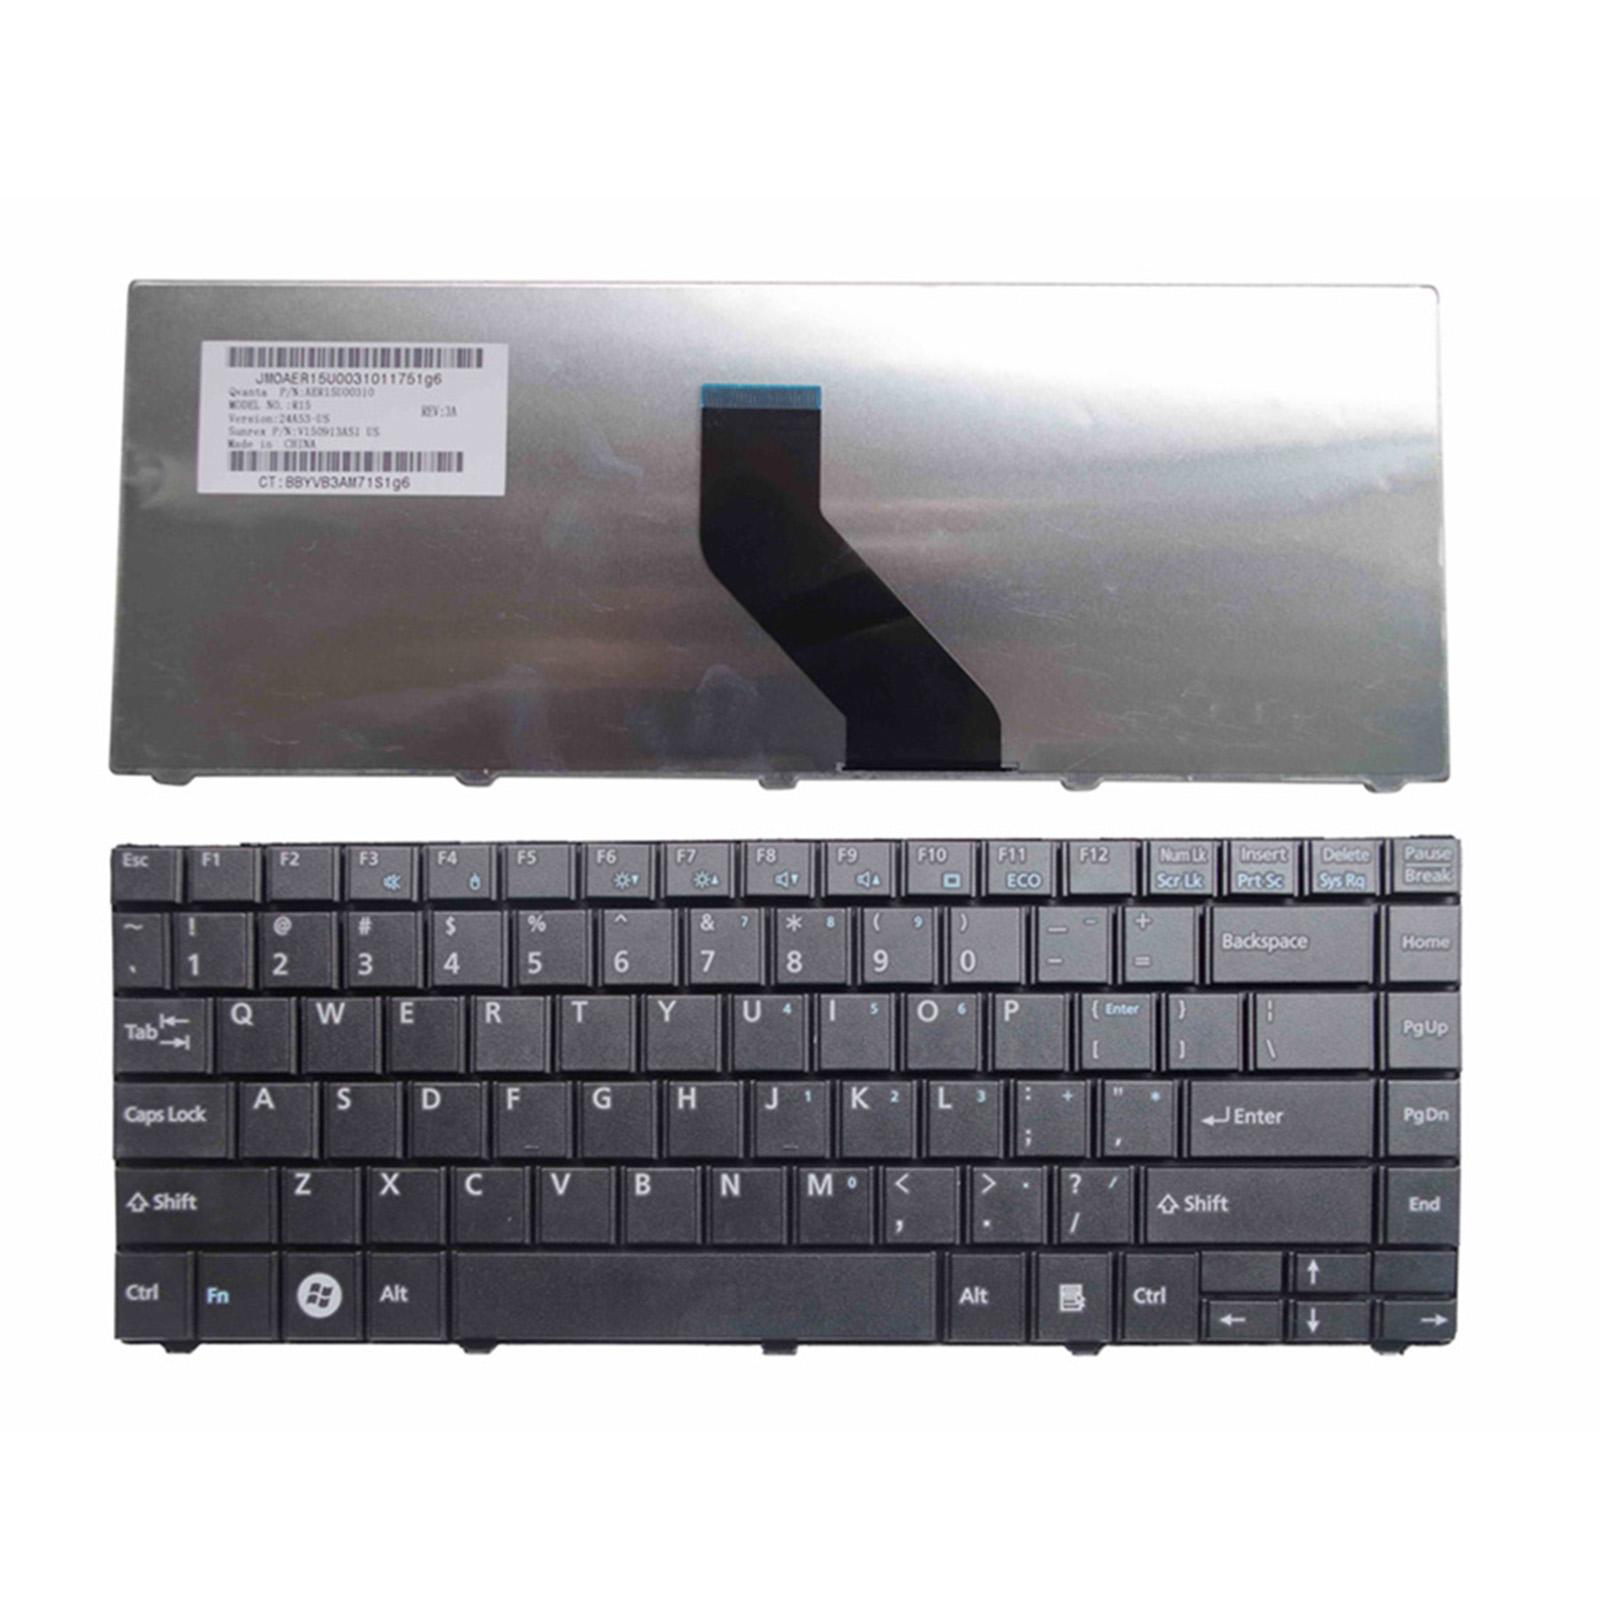 Black Keyboard Compact for Fujitsu Lifebook LH531 BH531 LH701 Acc US Layout